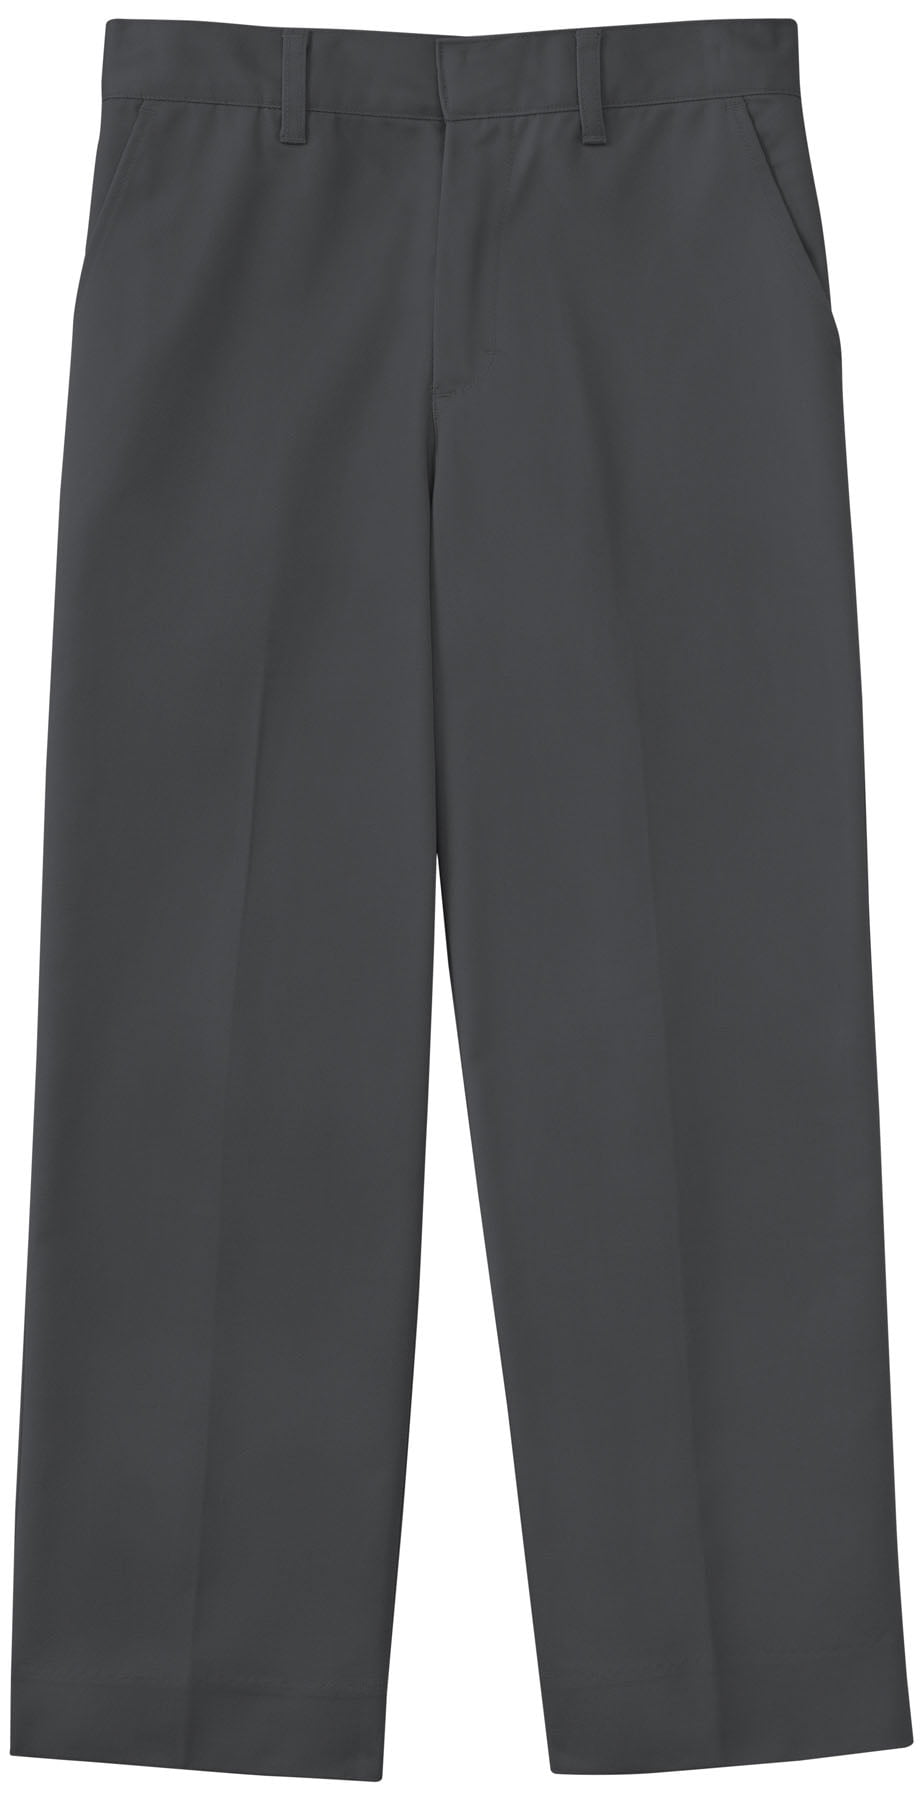 -J6 Boys School Uniform Super Stretch Soft Flat Front Pants ASSORTED COLORS